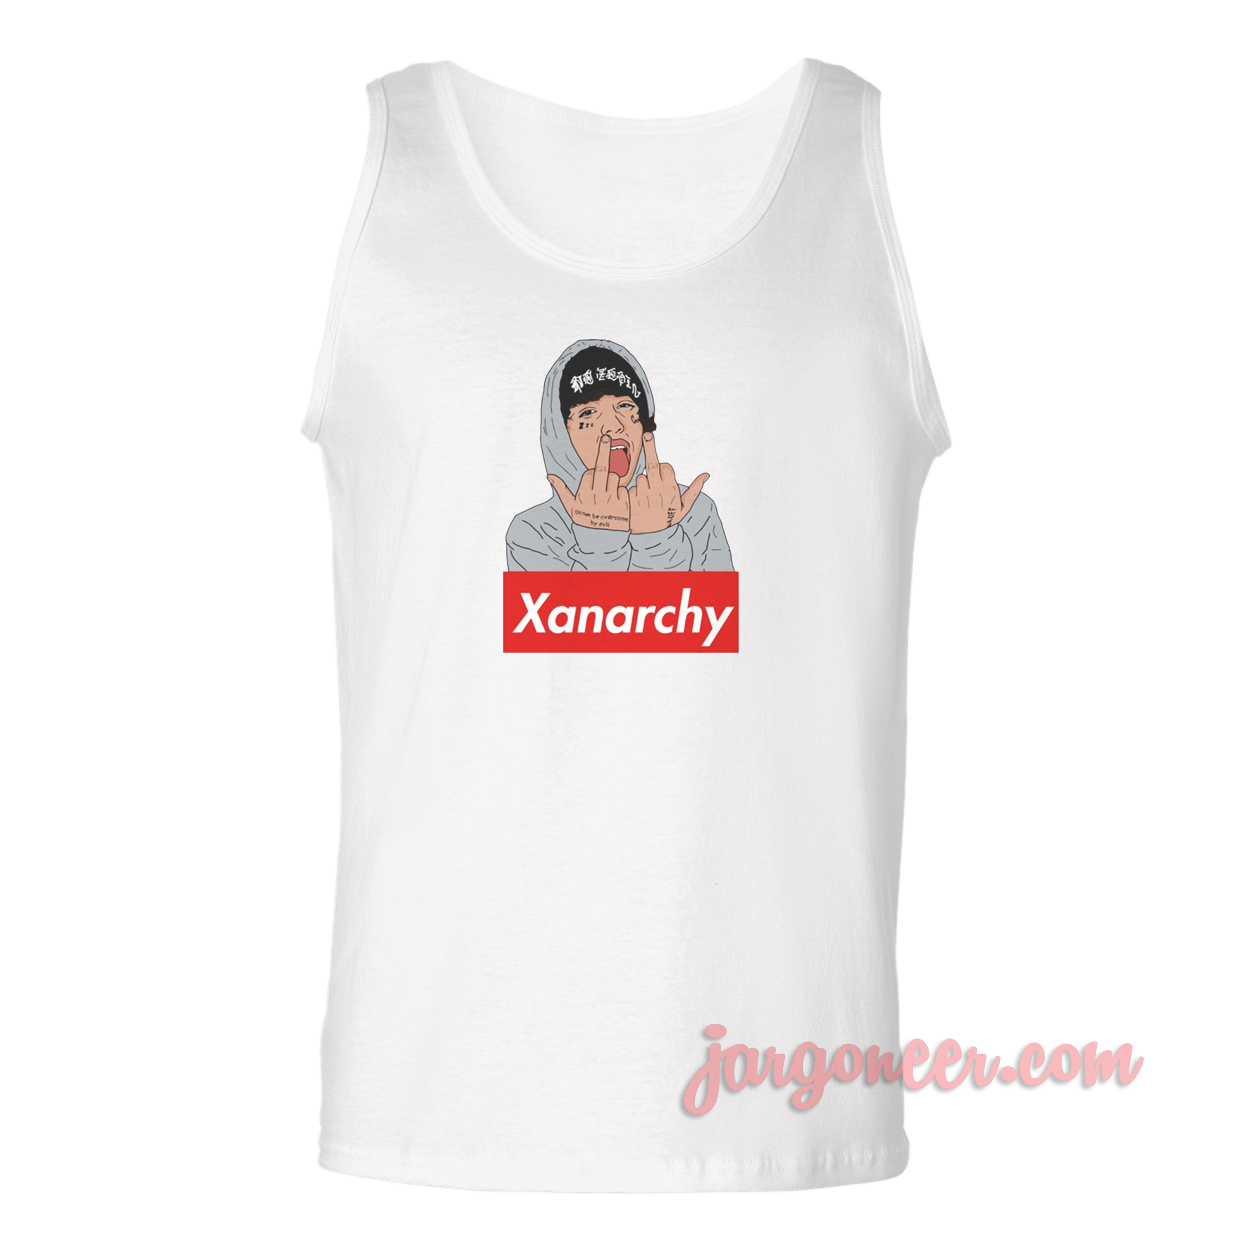 Lil Xan Xanarchy - Shop Unique Graphic Cool Shirt Designs